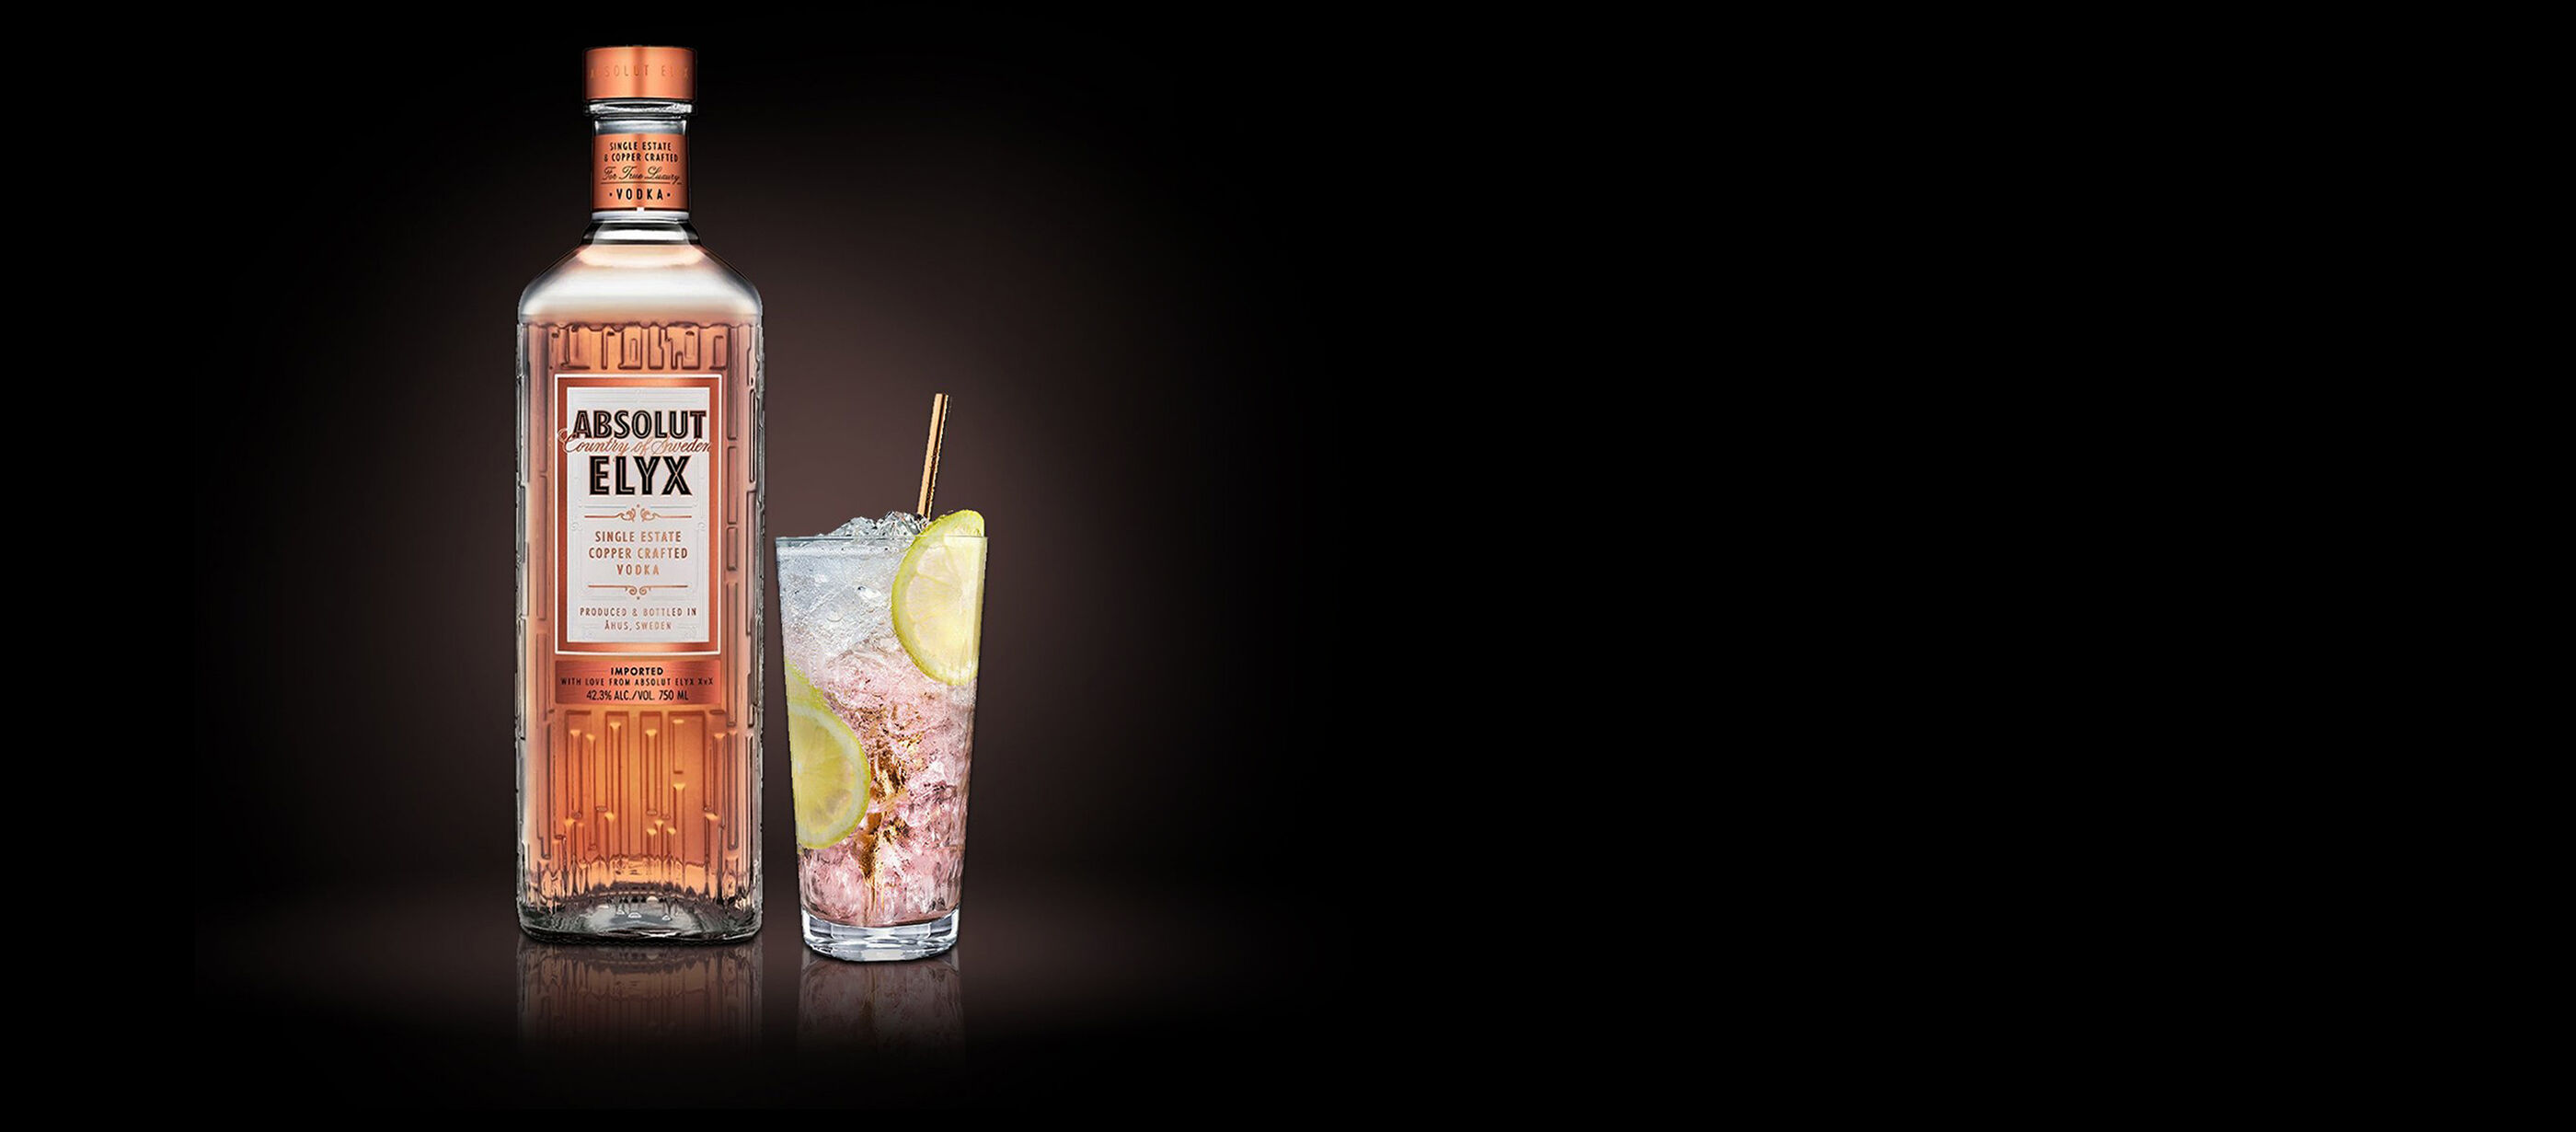 The Absolut Elyx Spritz Cocktail